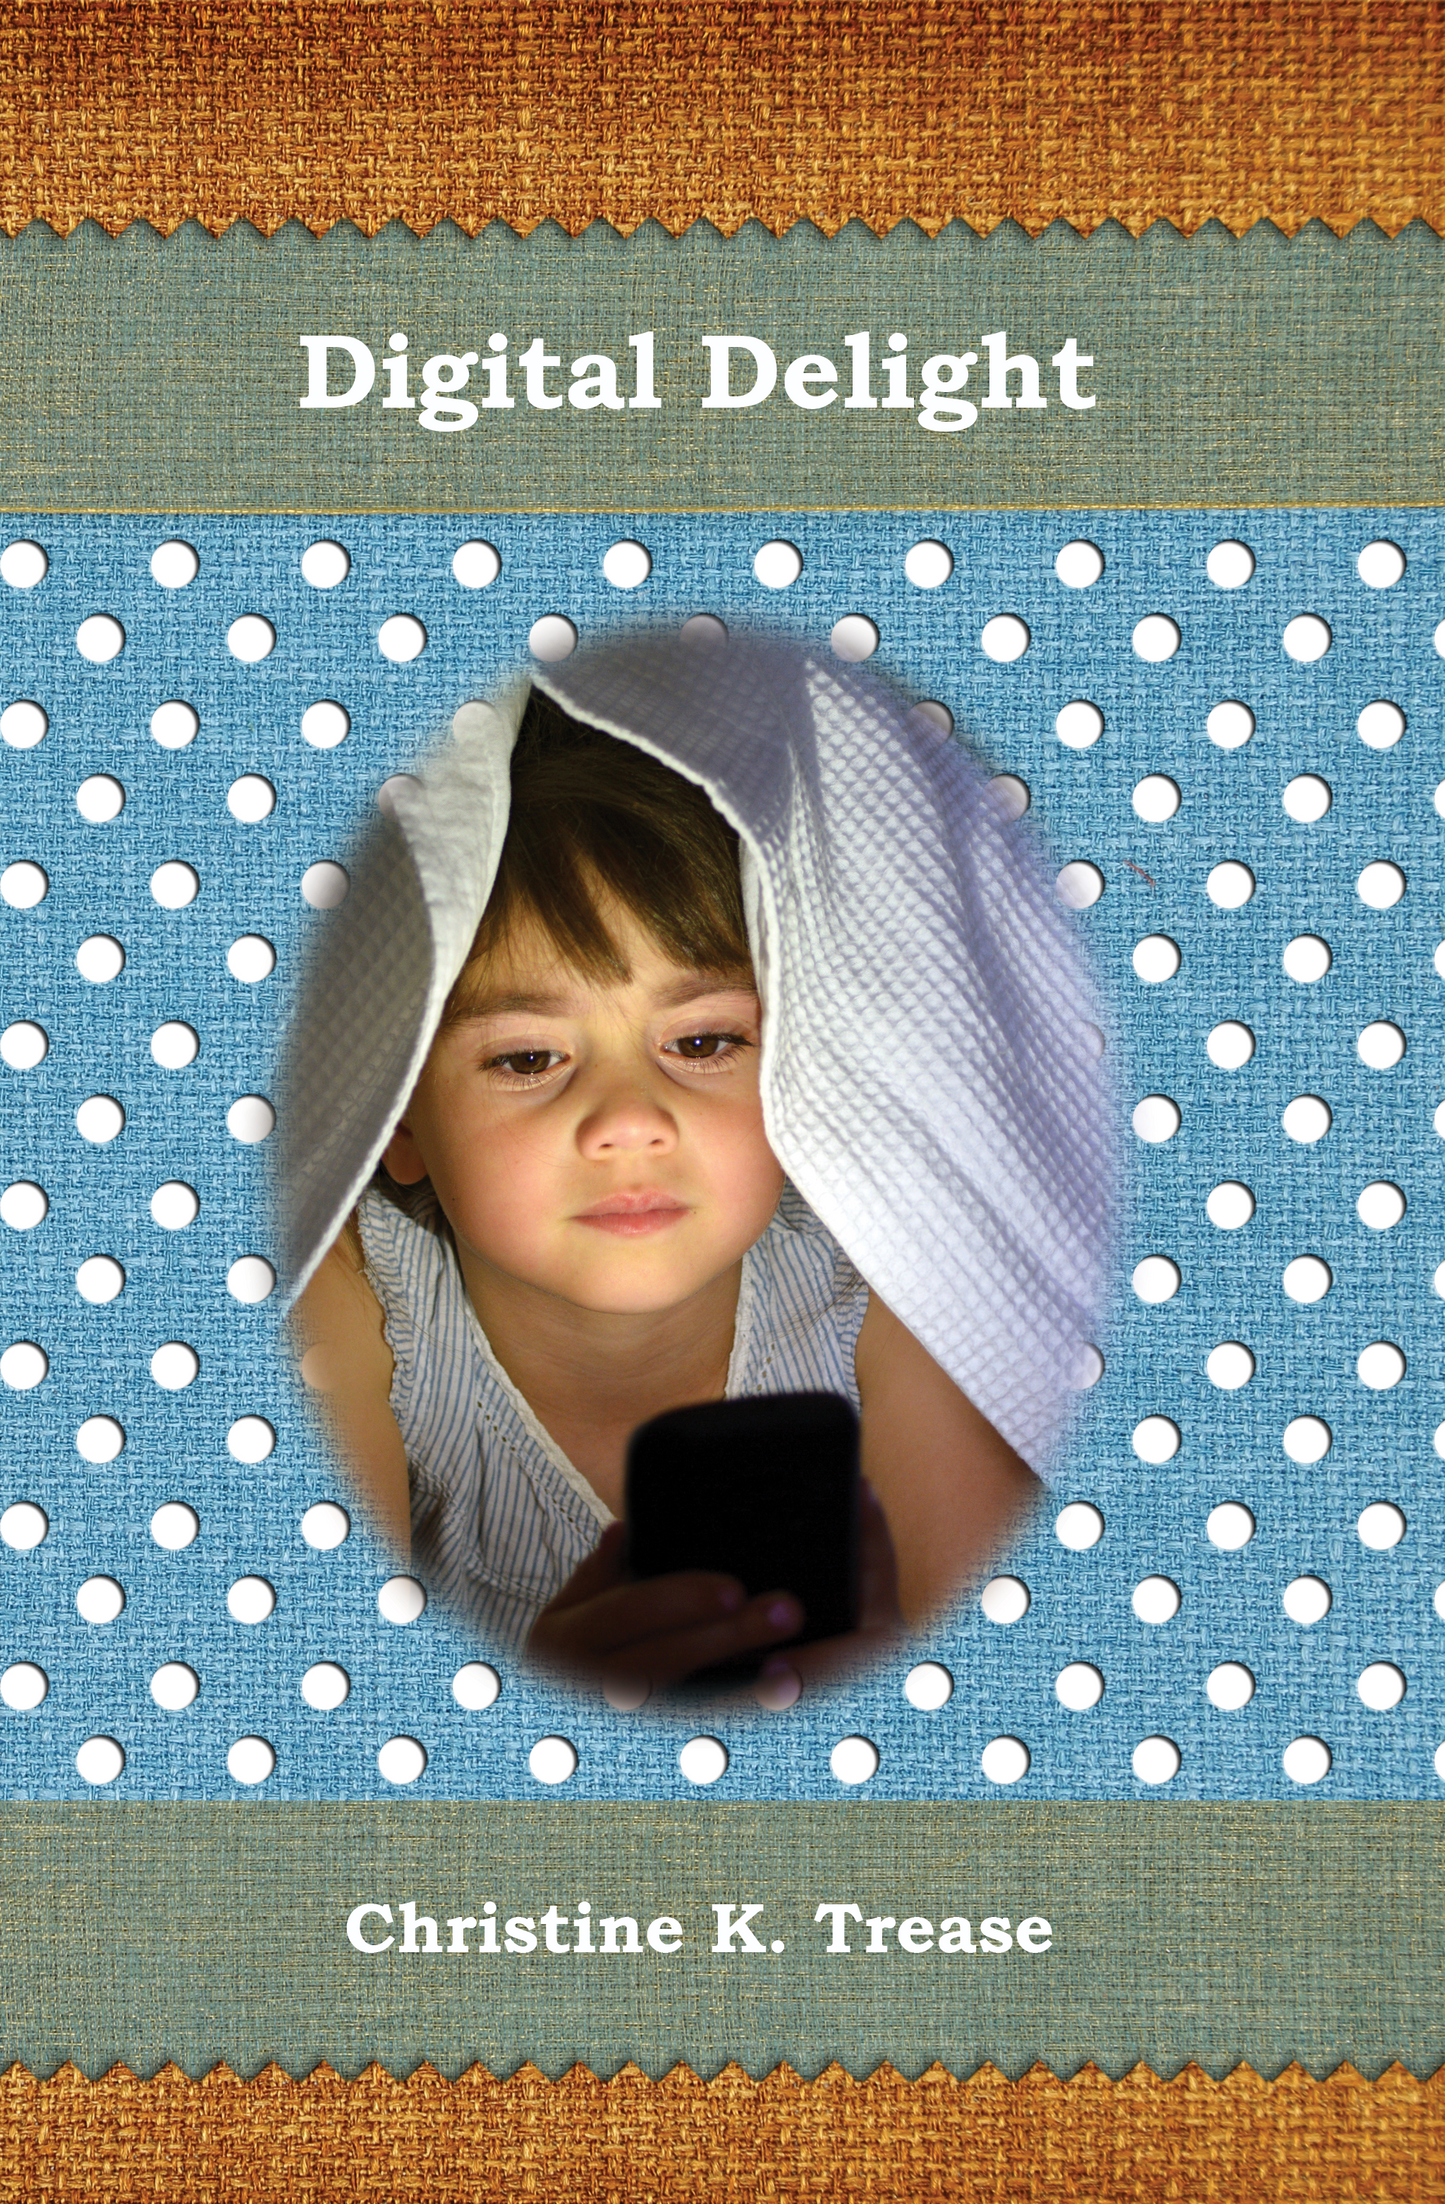 Book Children's-Digital Delight